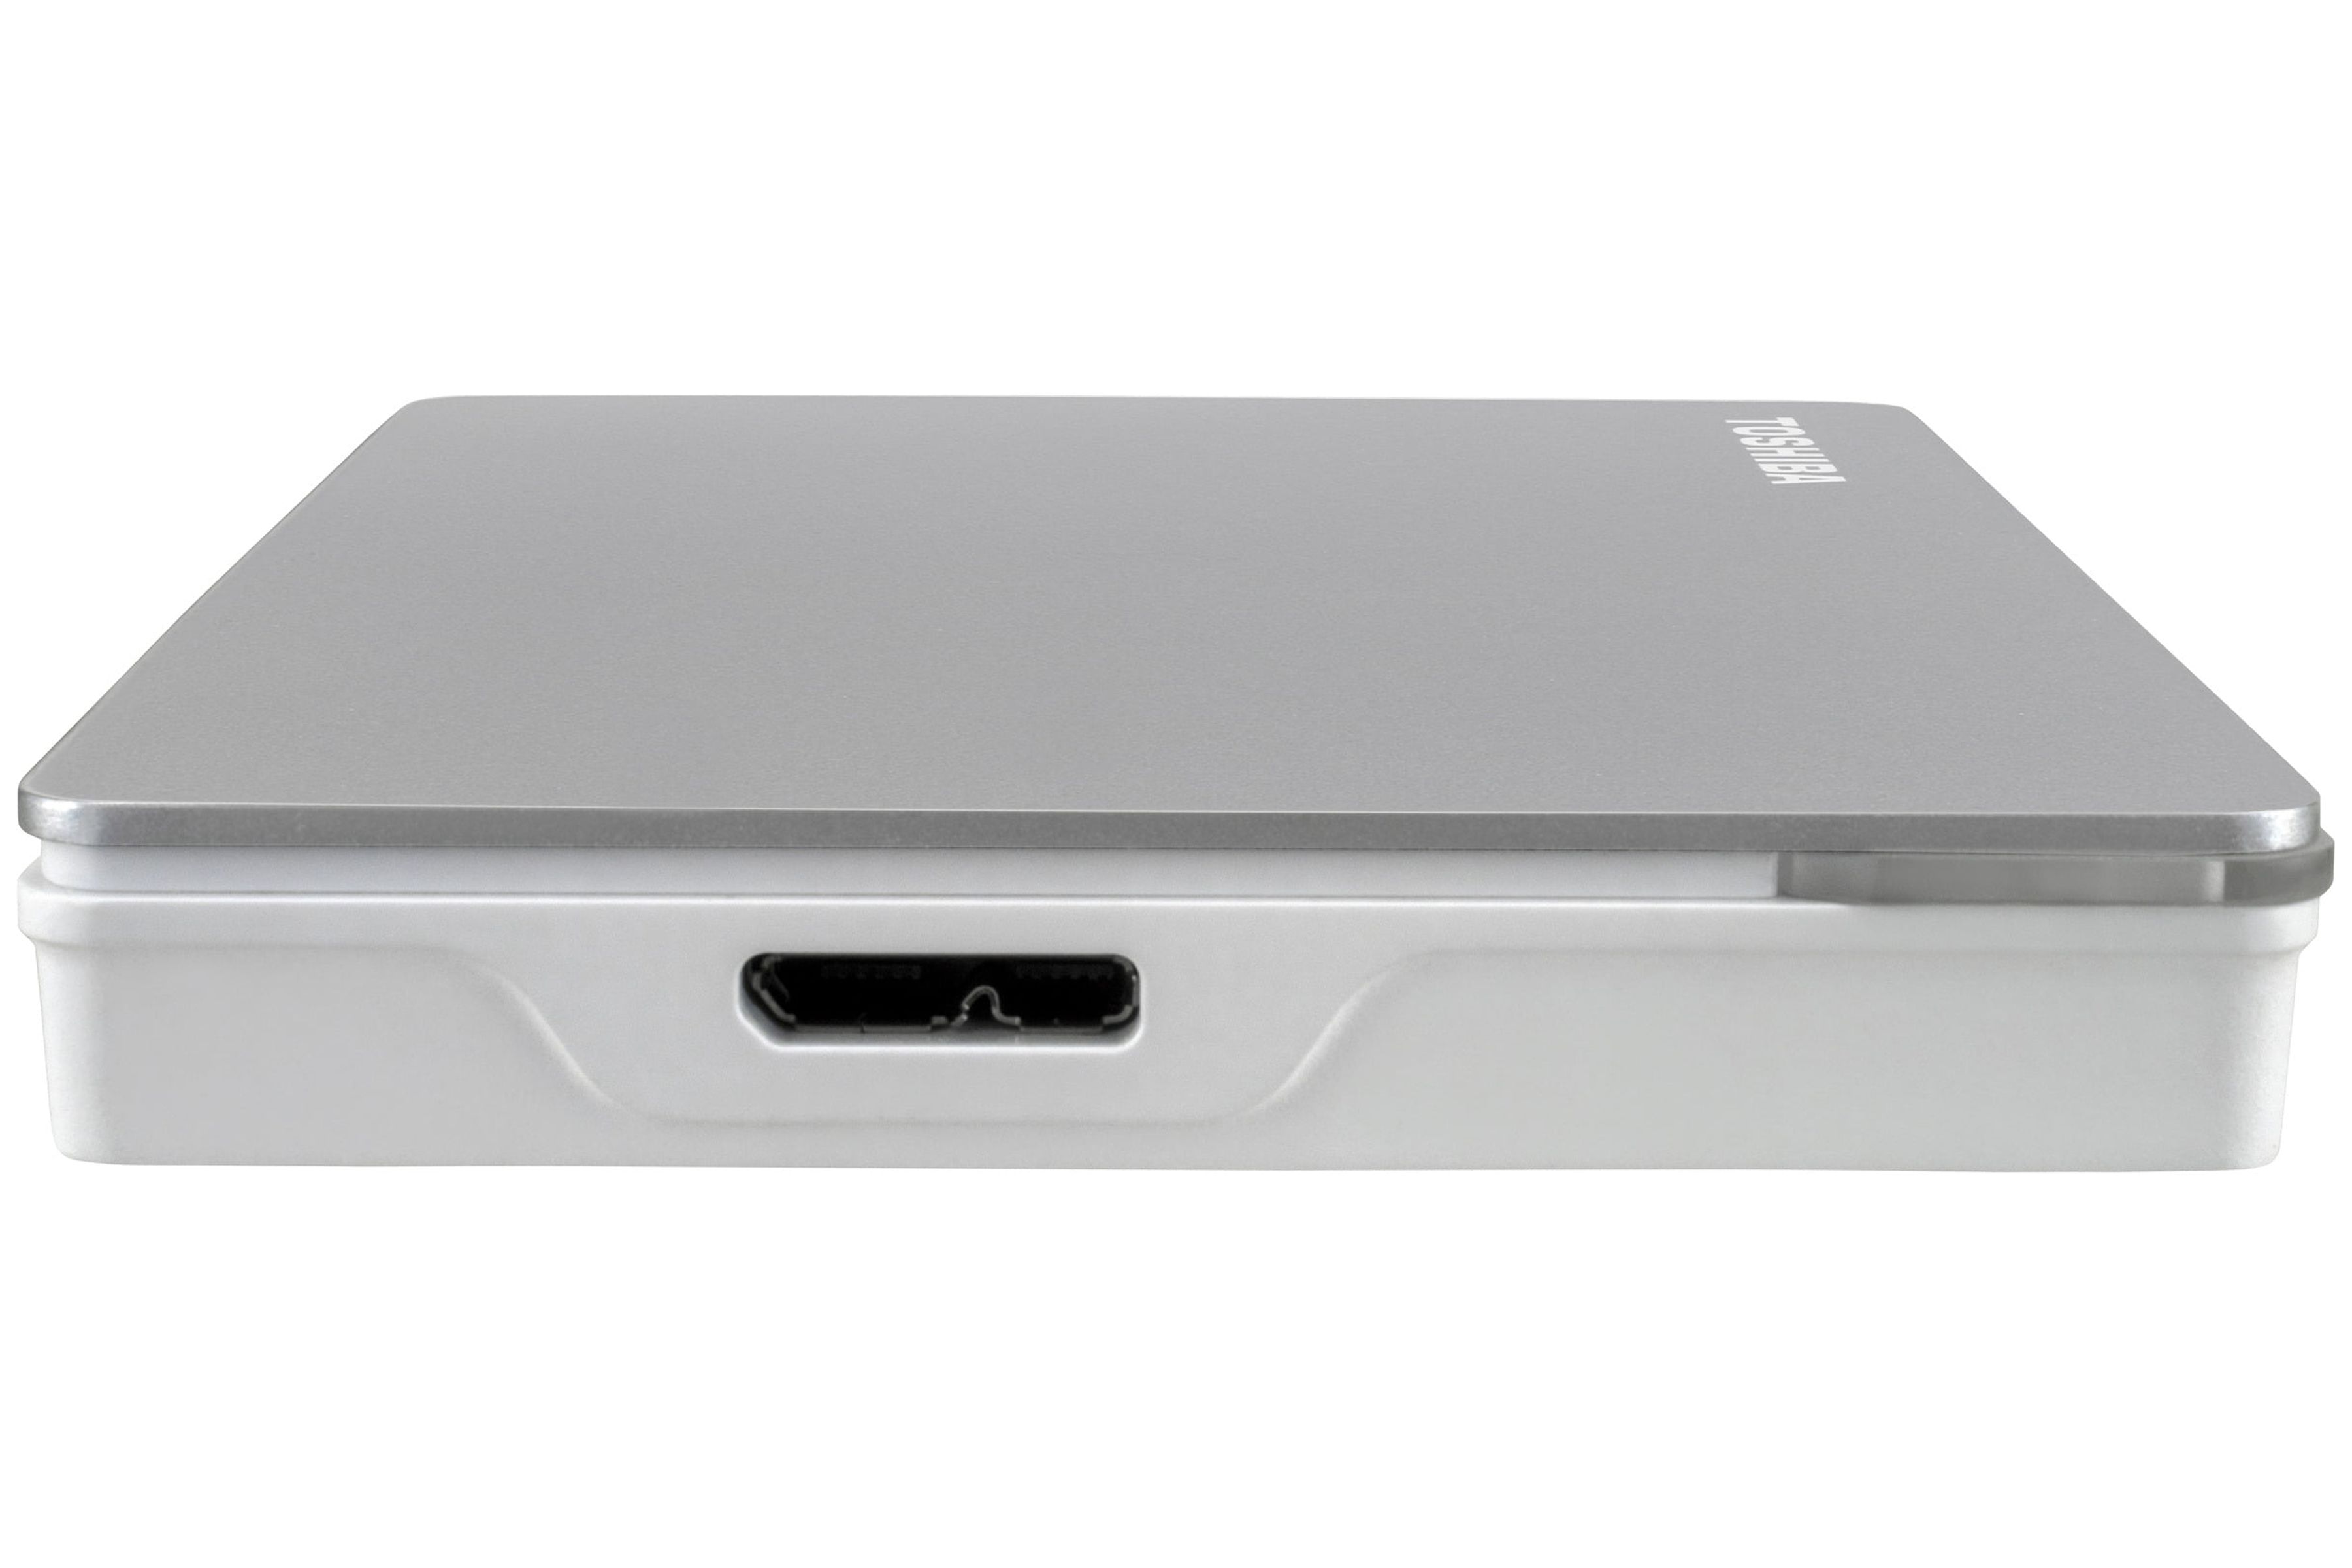 Toshiba Canvio Flex Portable External Hard Drive 1TB Silver - image 4 of 5